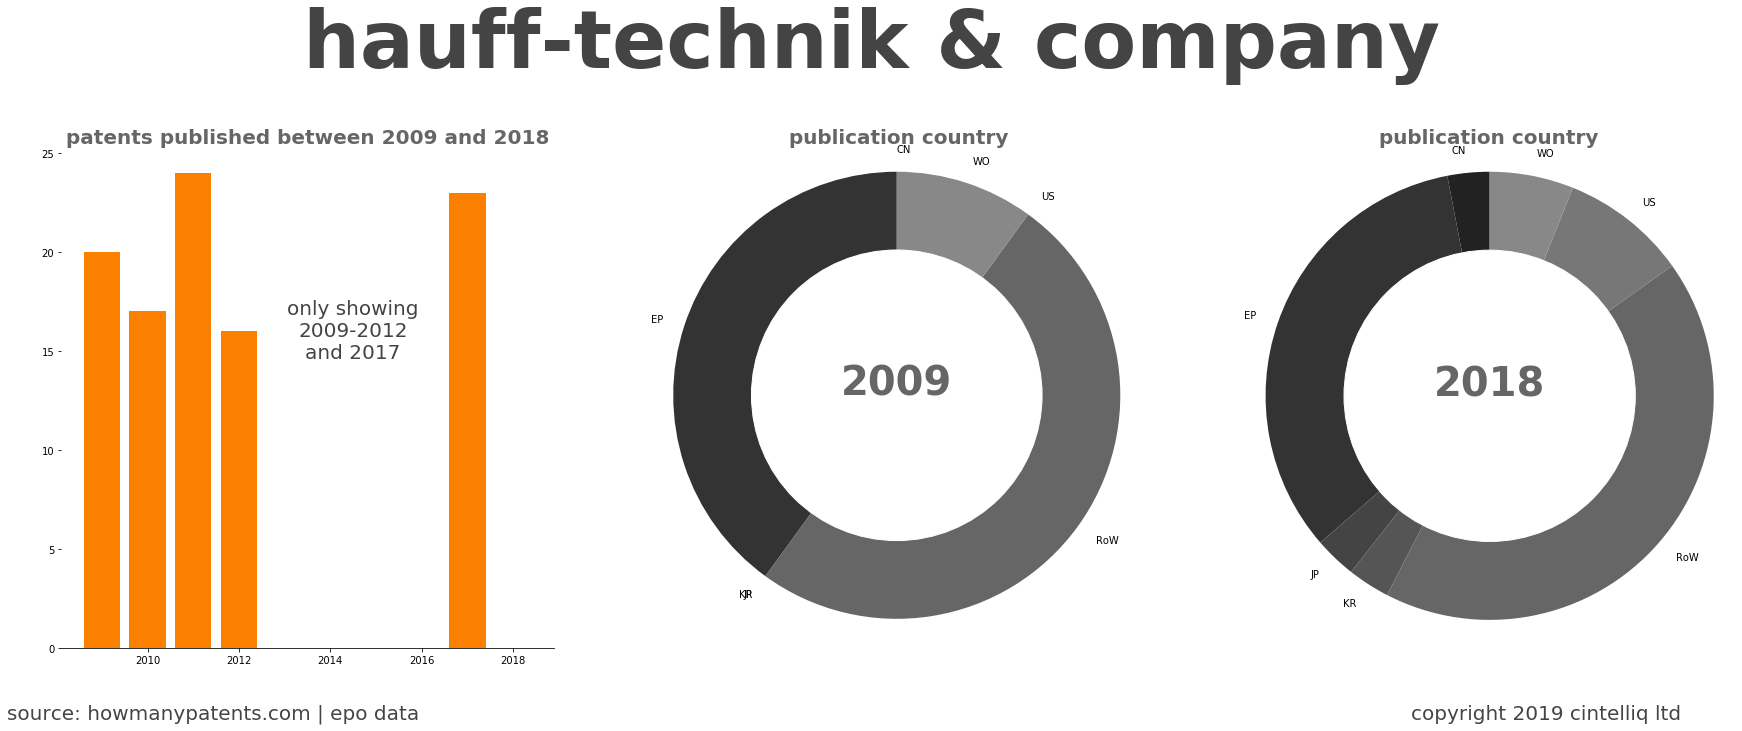 summary of patents for Hauff-Technik & Company